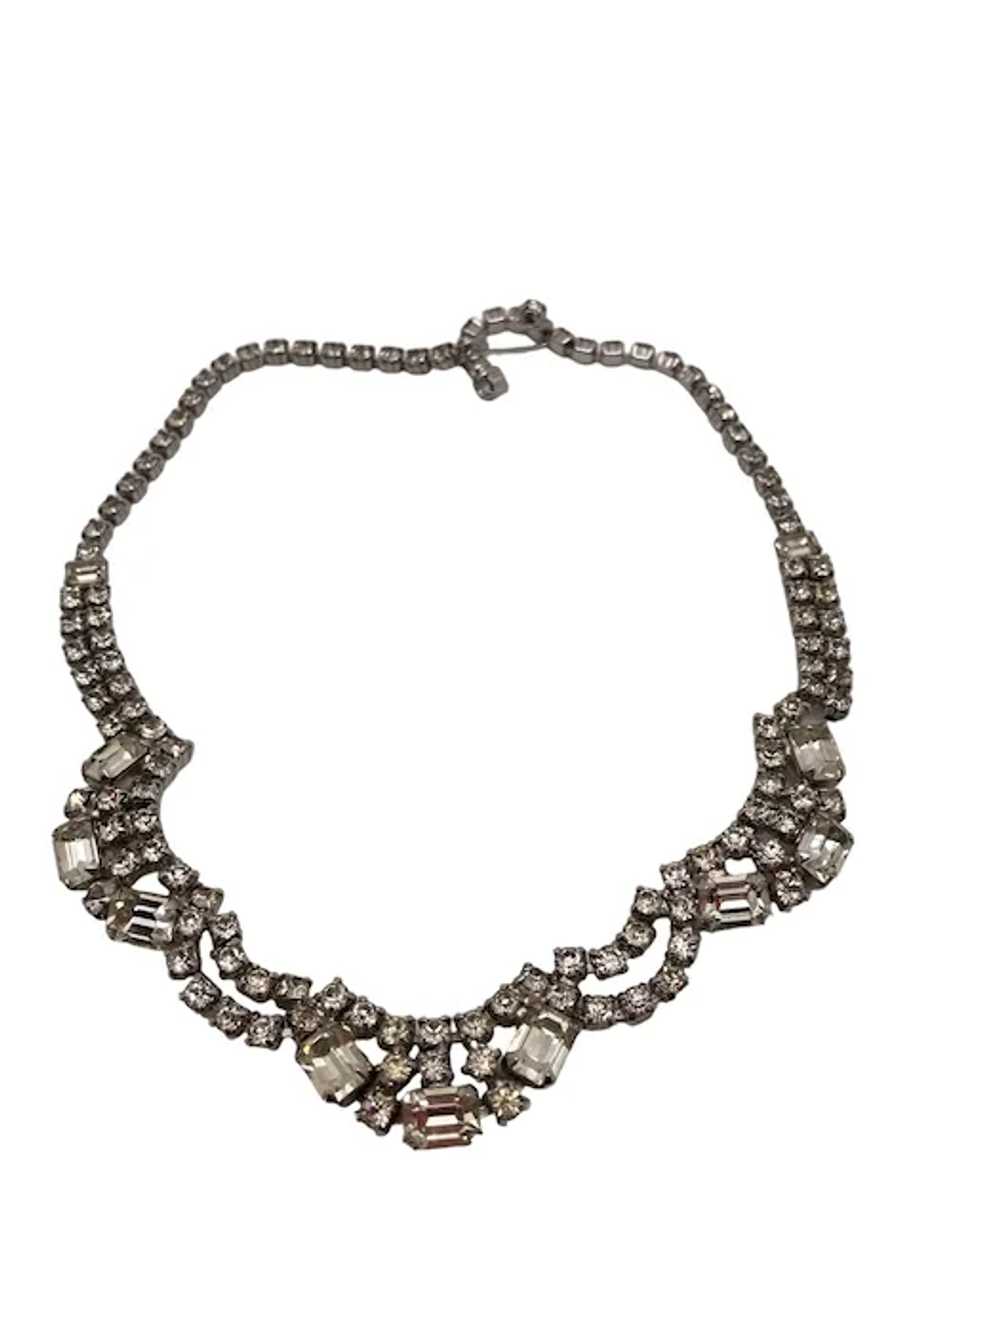 Vintage Mid-Century Rhinestone Choker Necklace - image 2